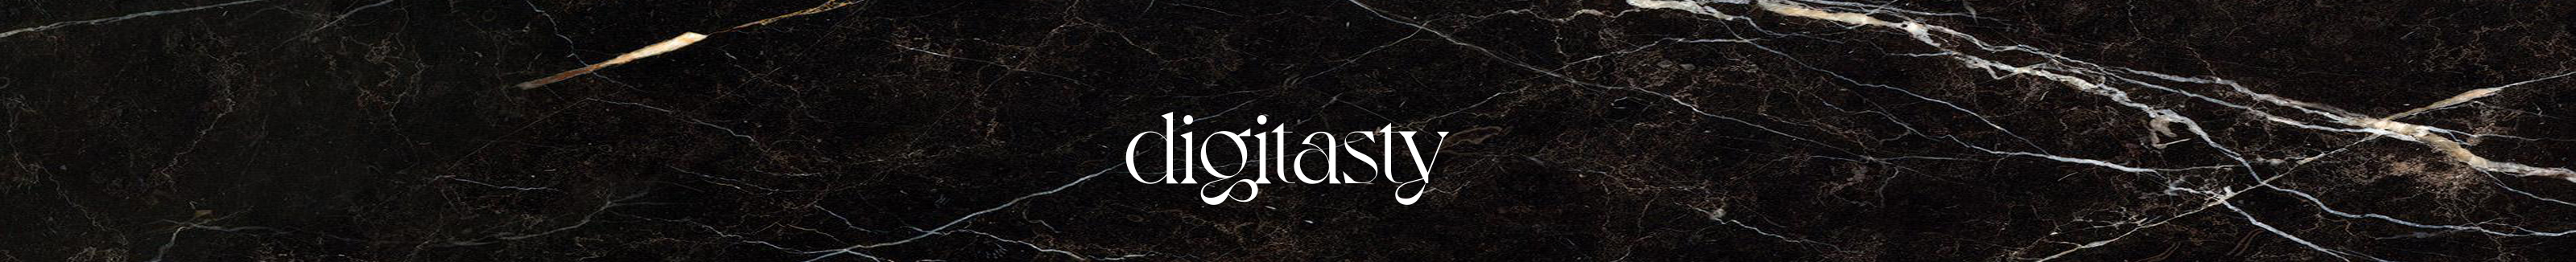 Digitasty Agency's profile banner